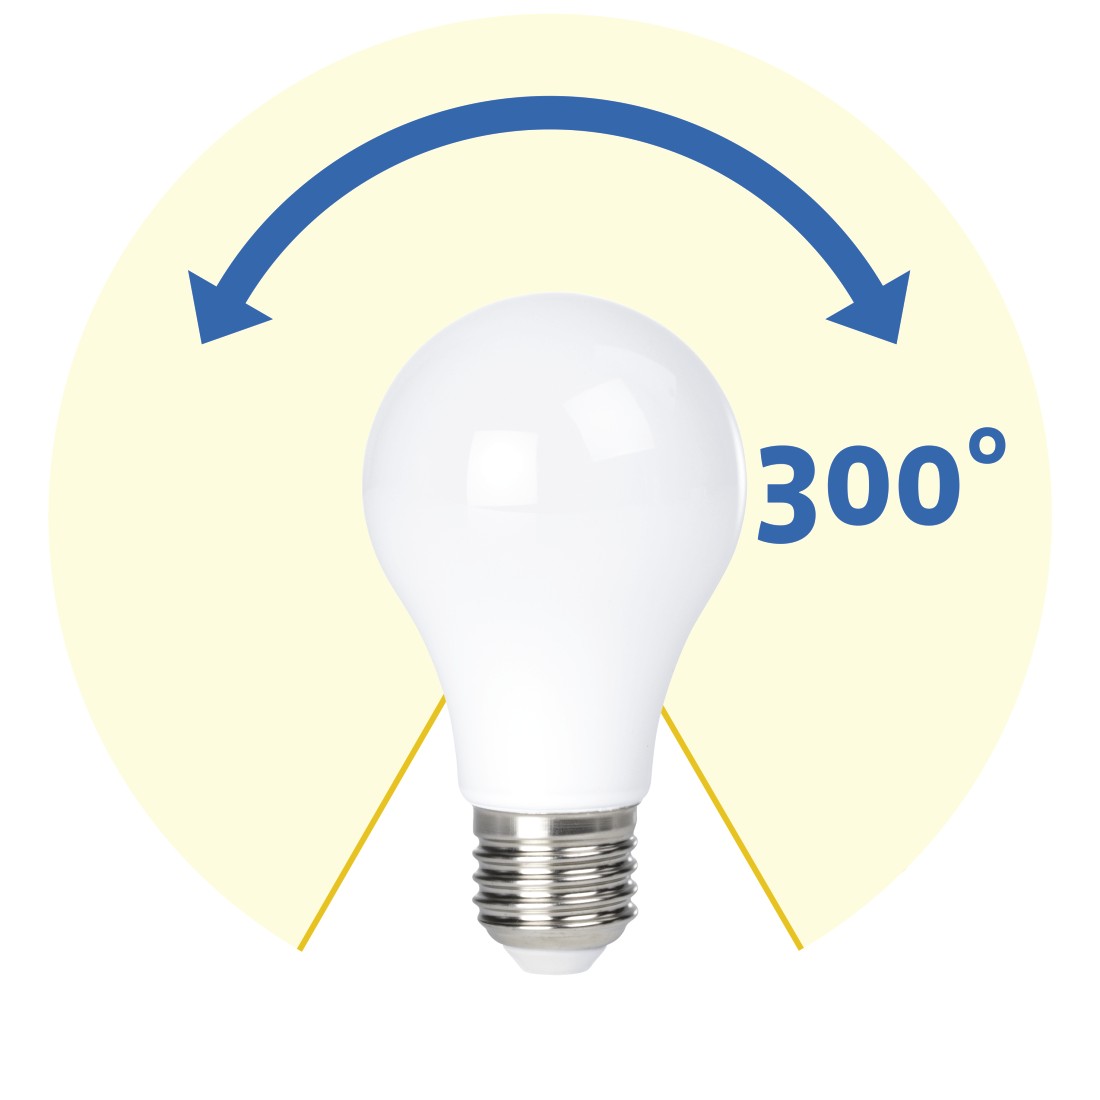 awx Druckfähige Anwendung - Xavax, LED-Lampe, E27, 630lm ersetzt 50W, Glühlampe, Warmweiß, Vollglas